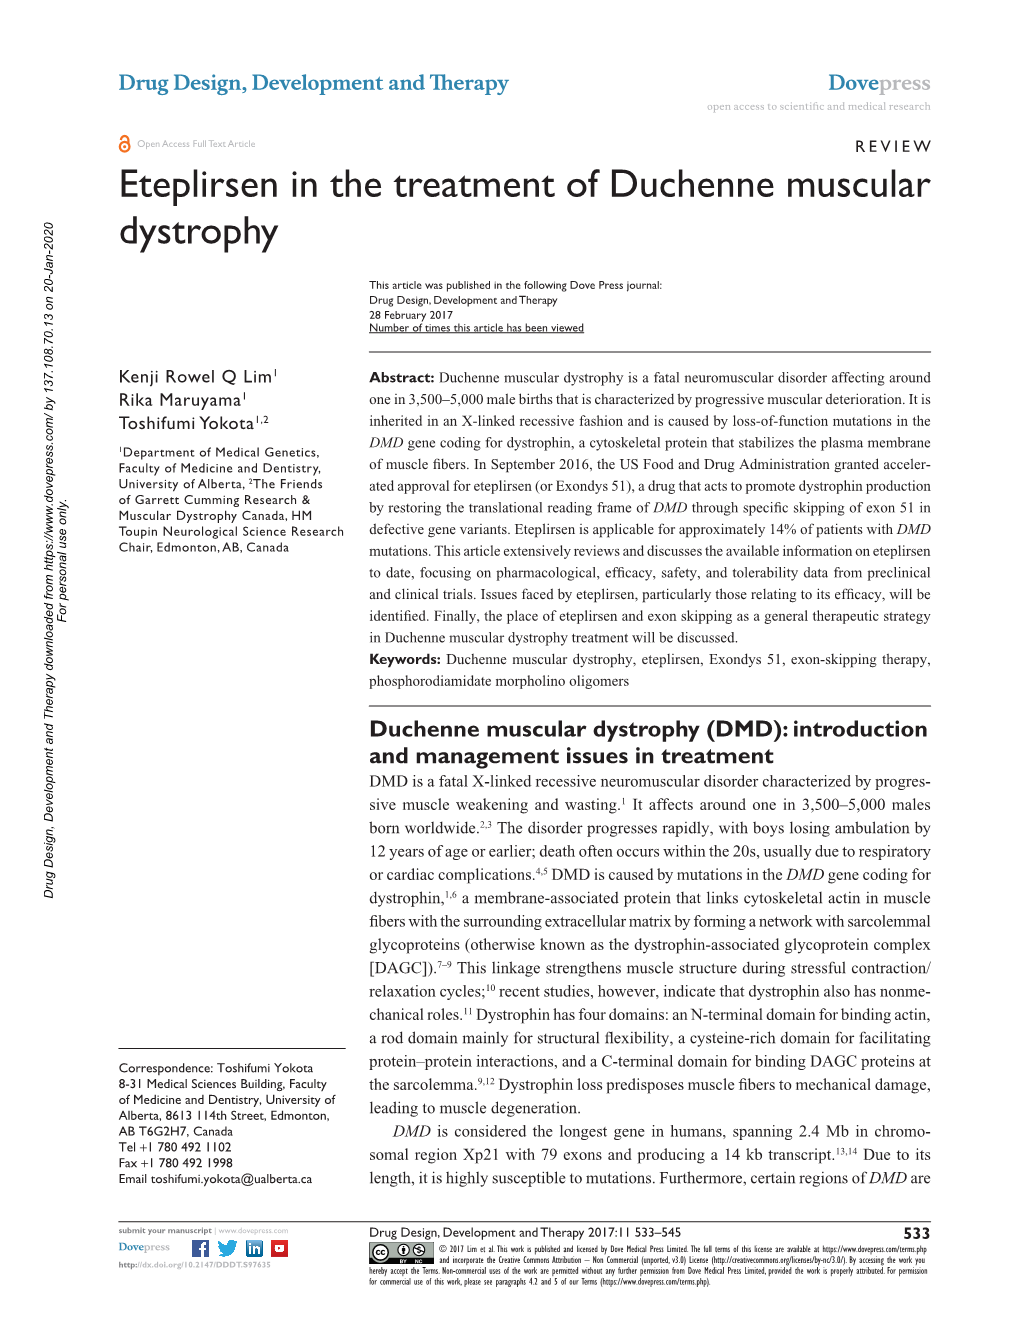 Eteplirsen in the Treatment of Duchenne Muscular Dystrophy